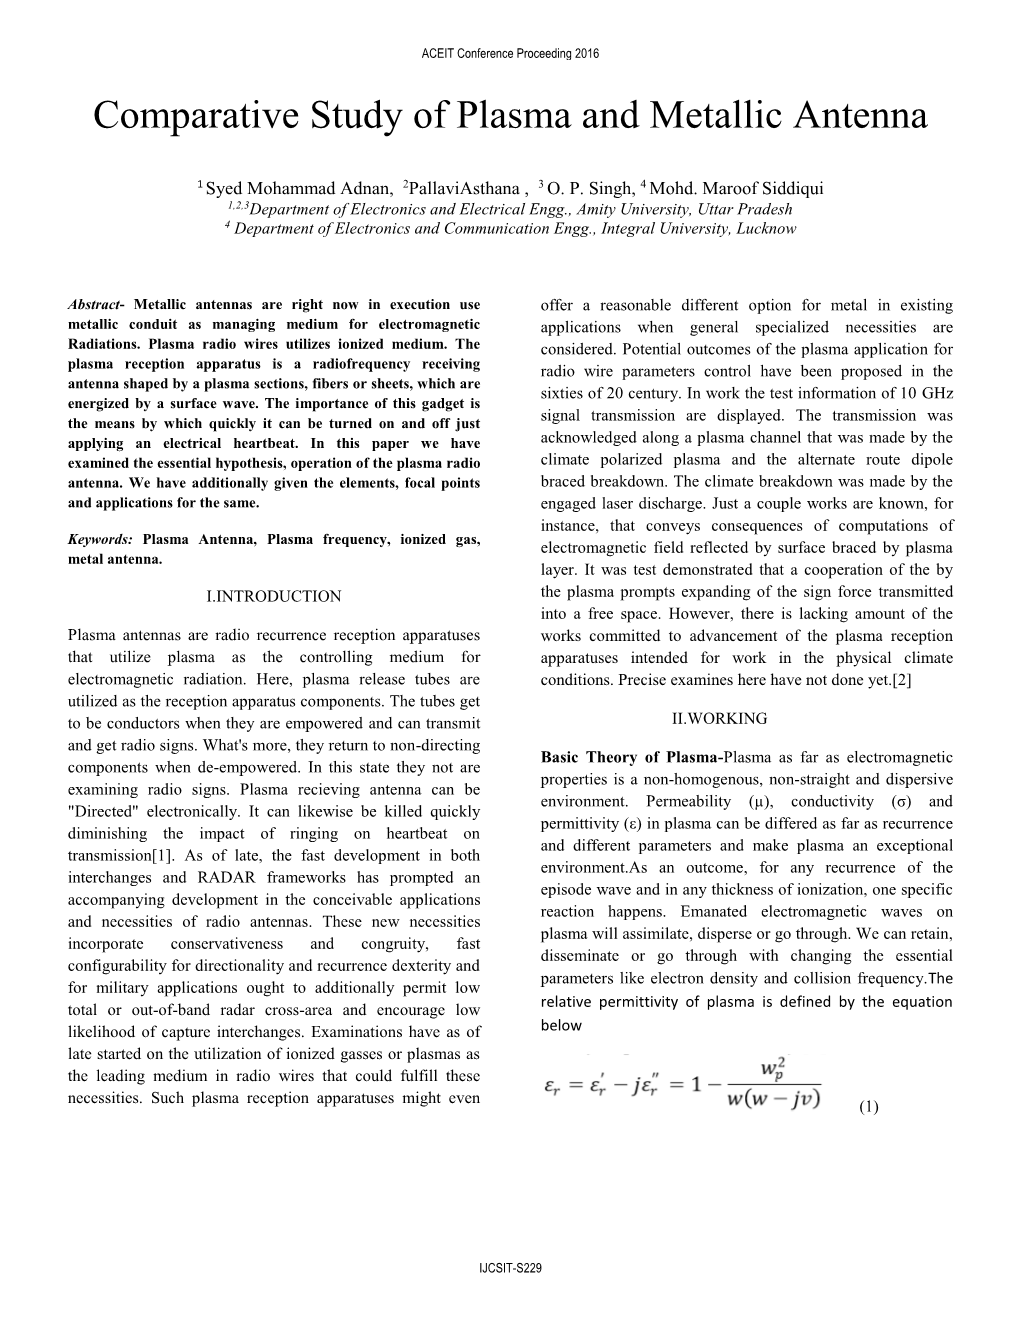 Comparative Study of Plasma and Metallic Antenna